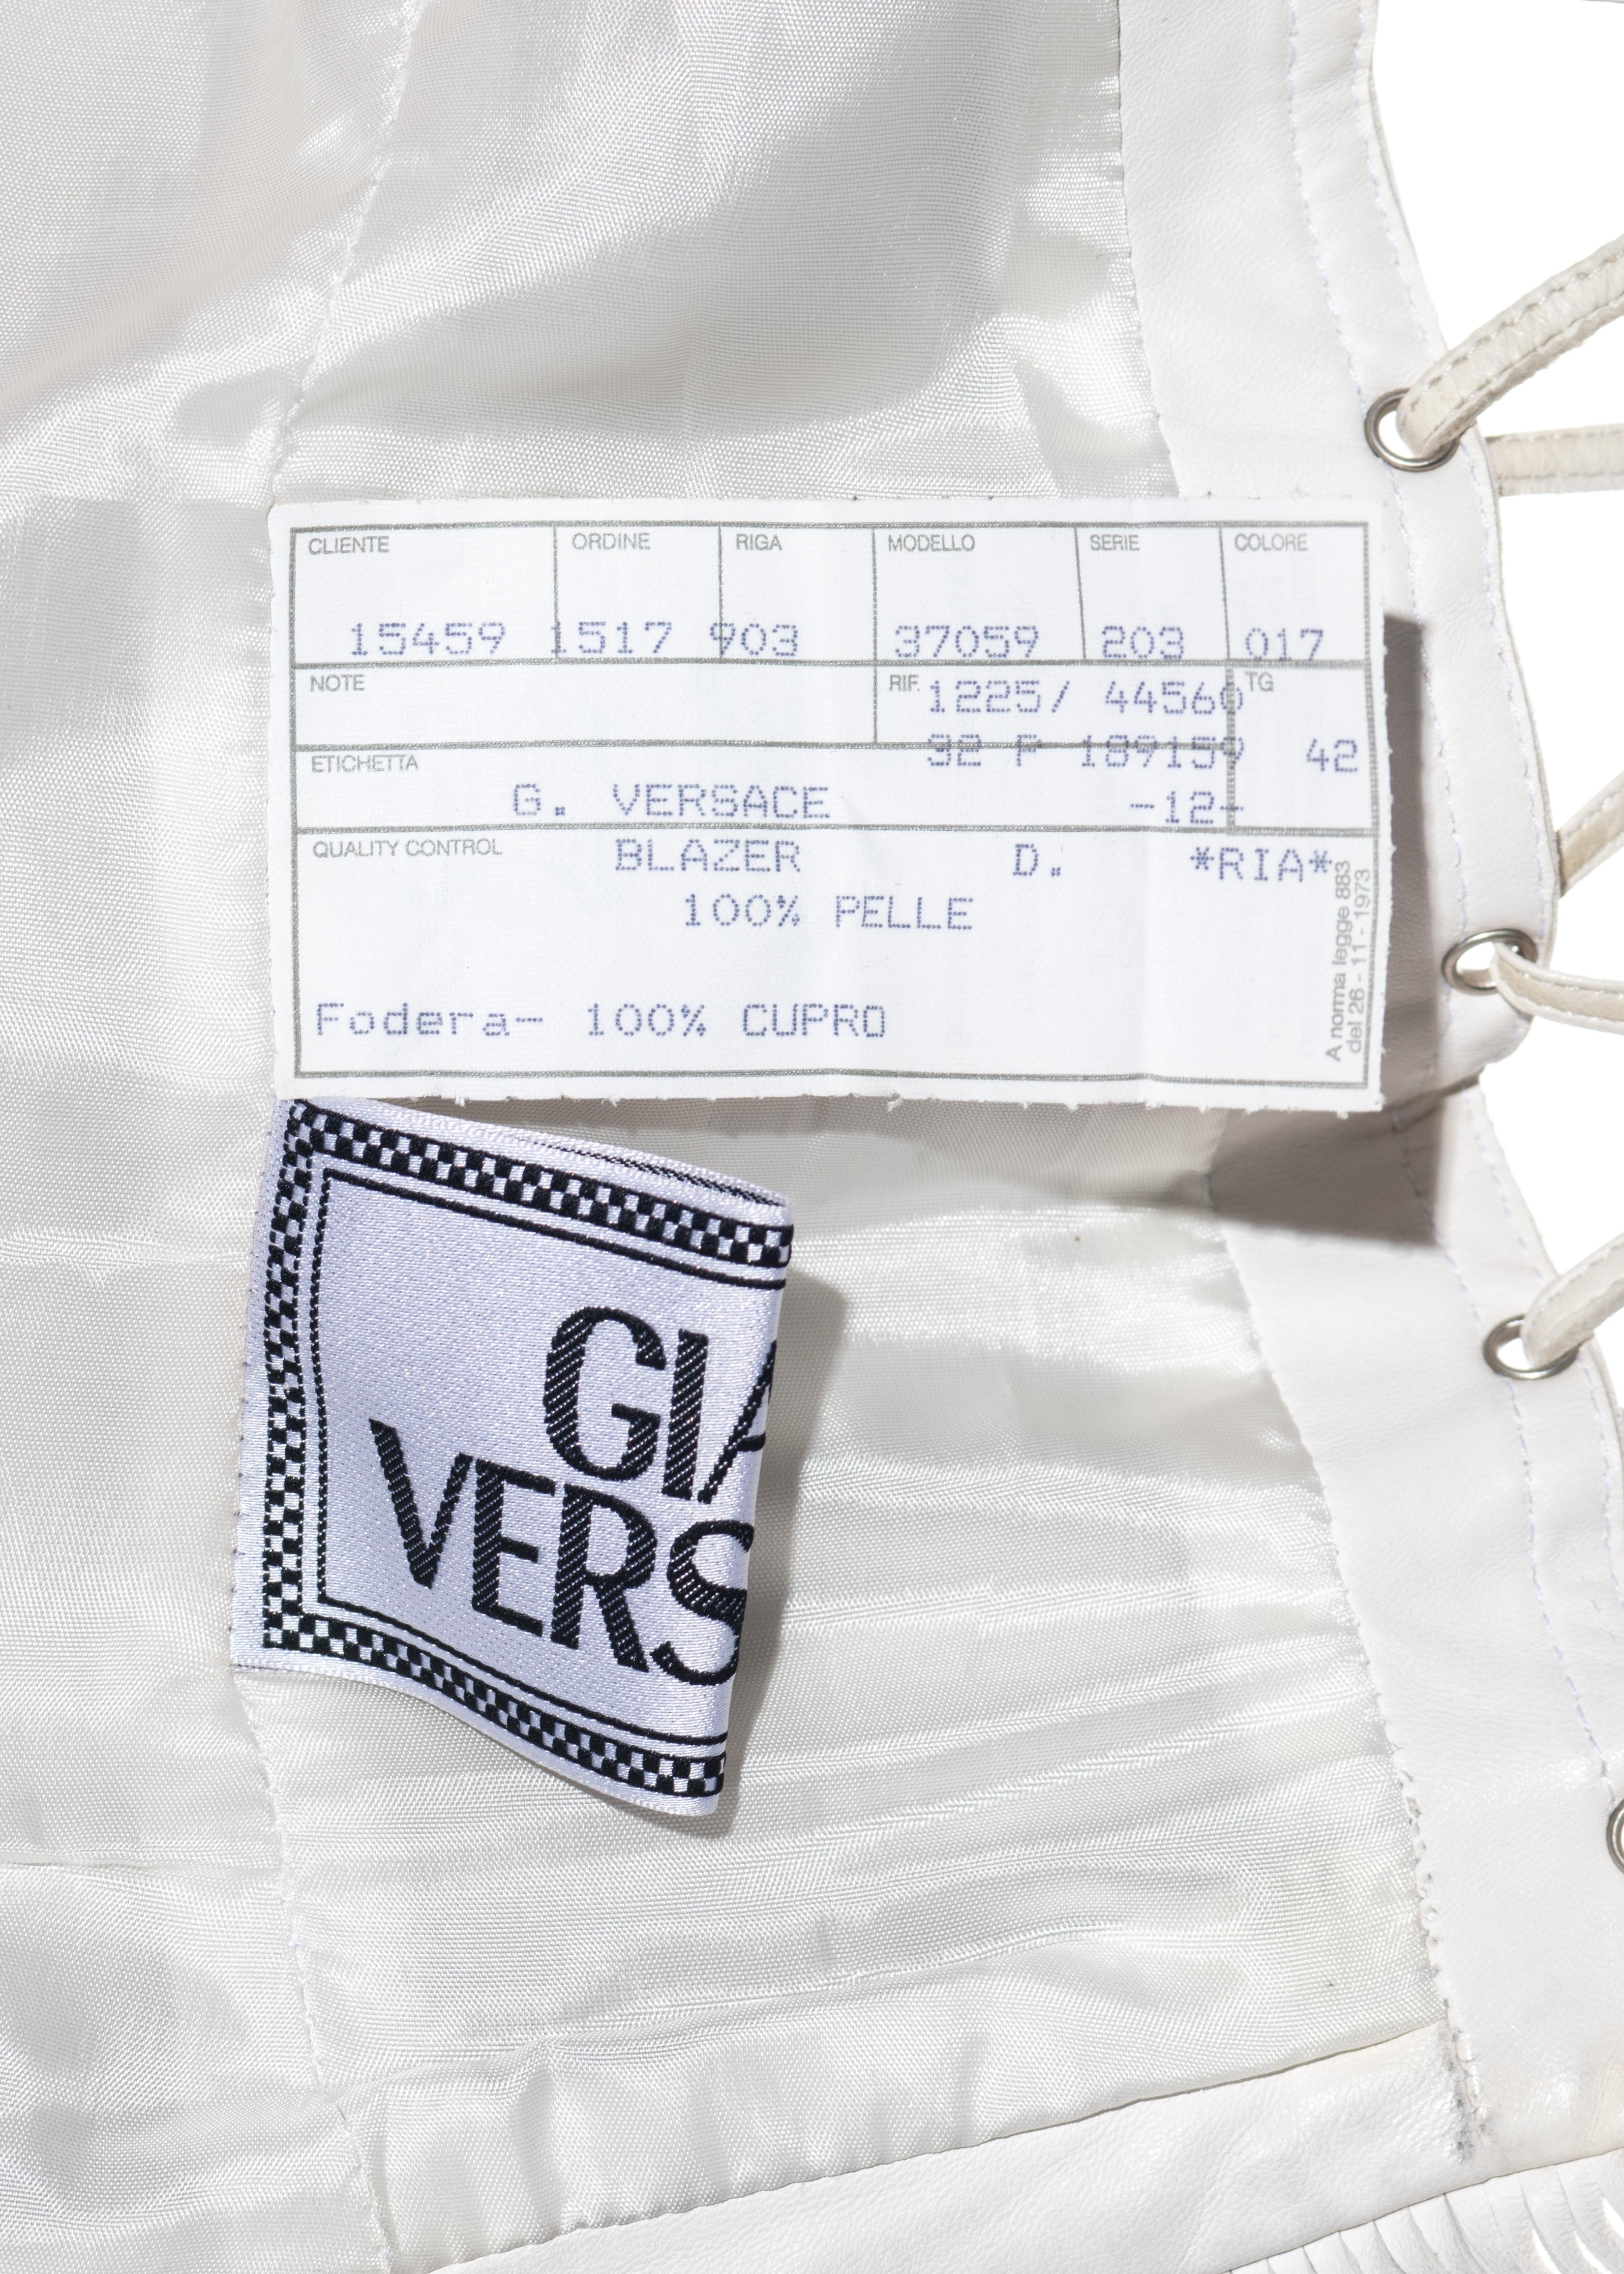 Gianni Versace white leather backless lace up fringed jacket, ss 2002 4